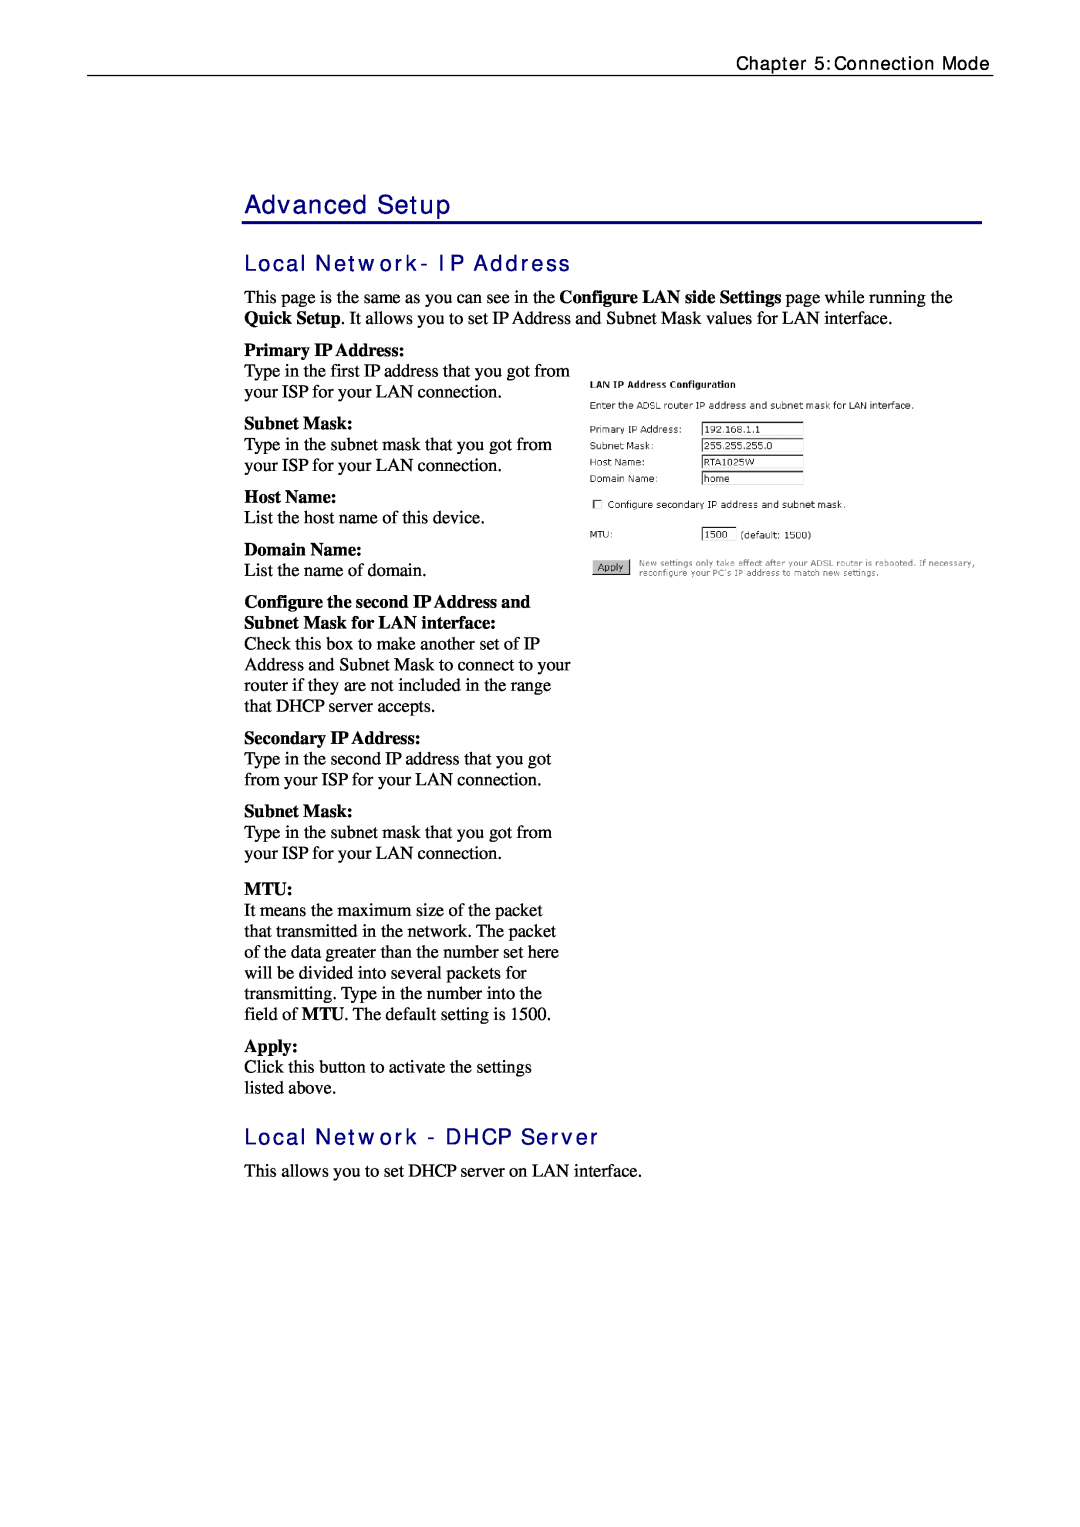 Siemens CL-010 Advanced Setup, Local Network- IP Address, Local Network - DHCP Server, Primary IP Address, Subnet Mask 